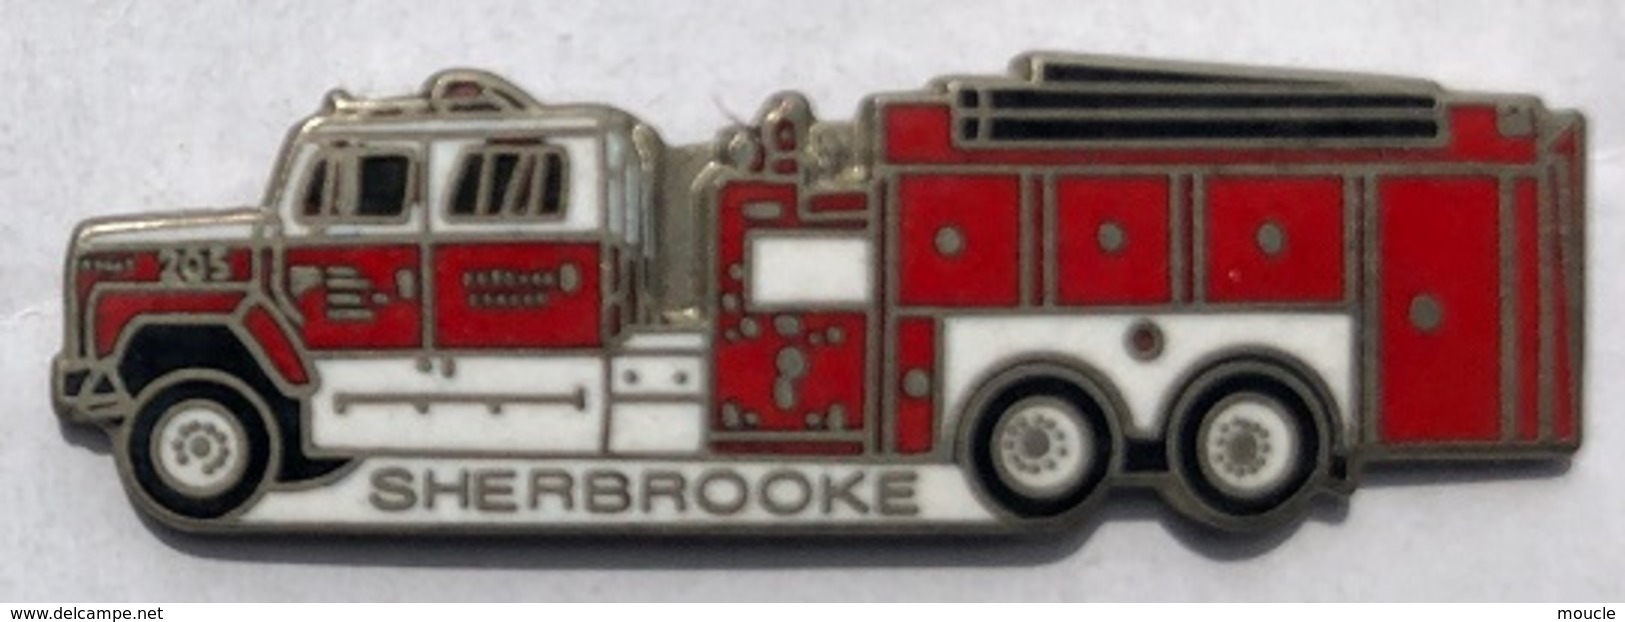 SAPEURS POMPIERS SHERBROOKE  - SERVICE DU FEU - CAMION - TRUCK FIREFIGHTERS - LKW - FEUERWEHRMANN - USA - US - (24) - Feuerwehr